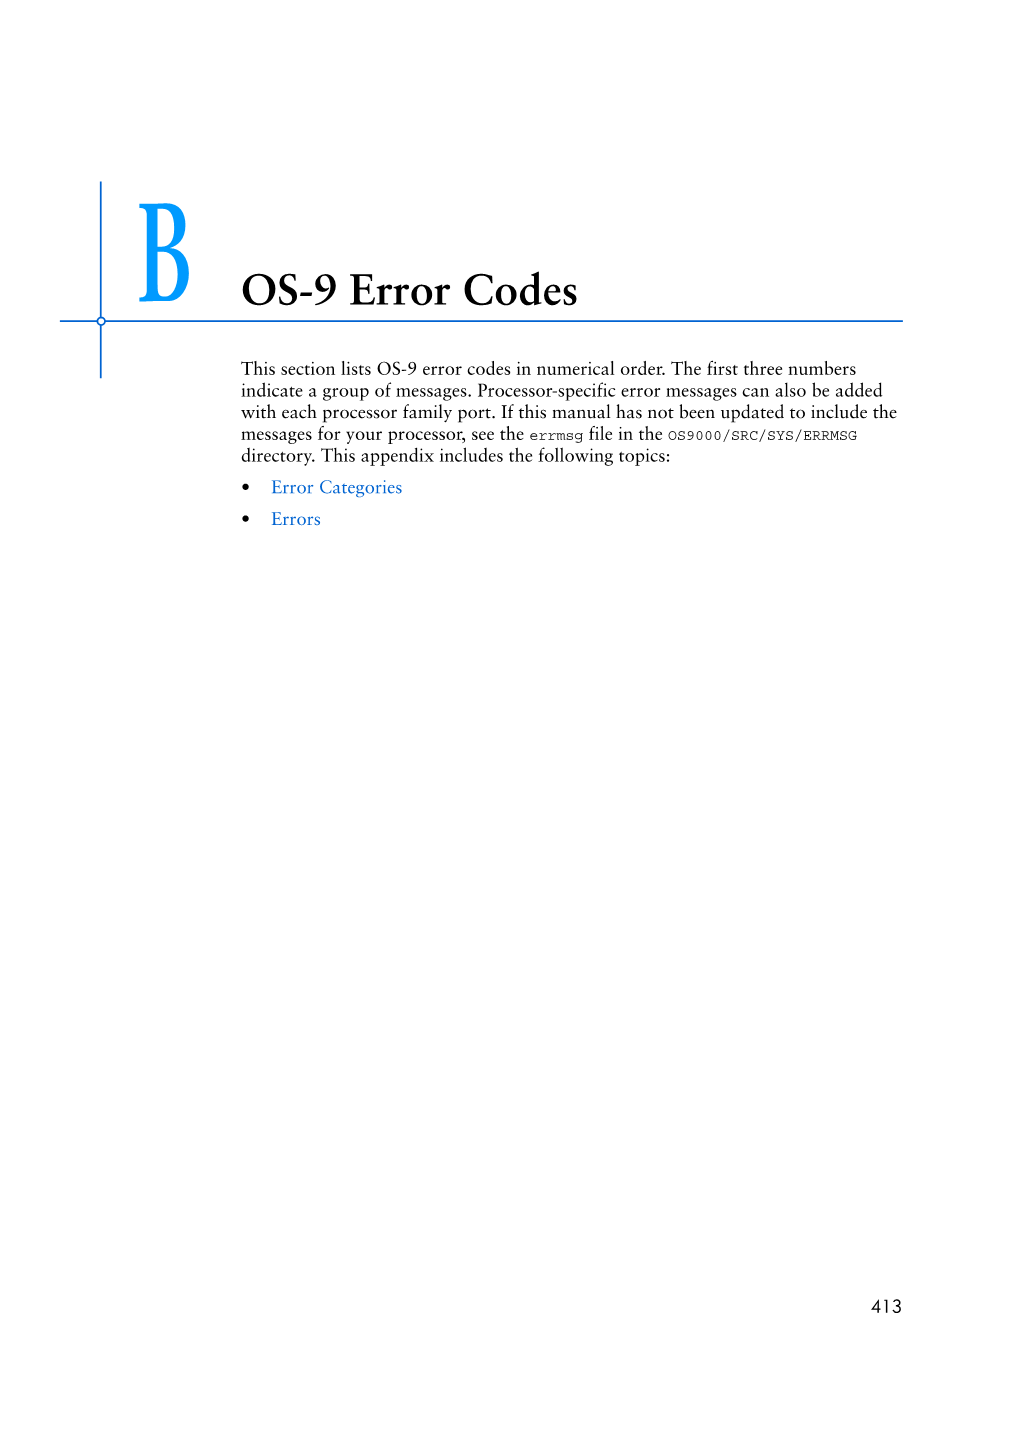 B OS-9 Error Codes